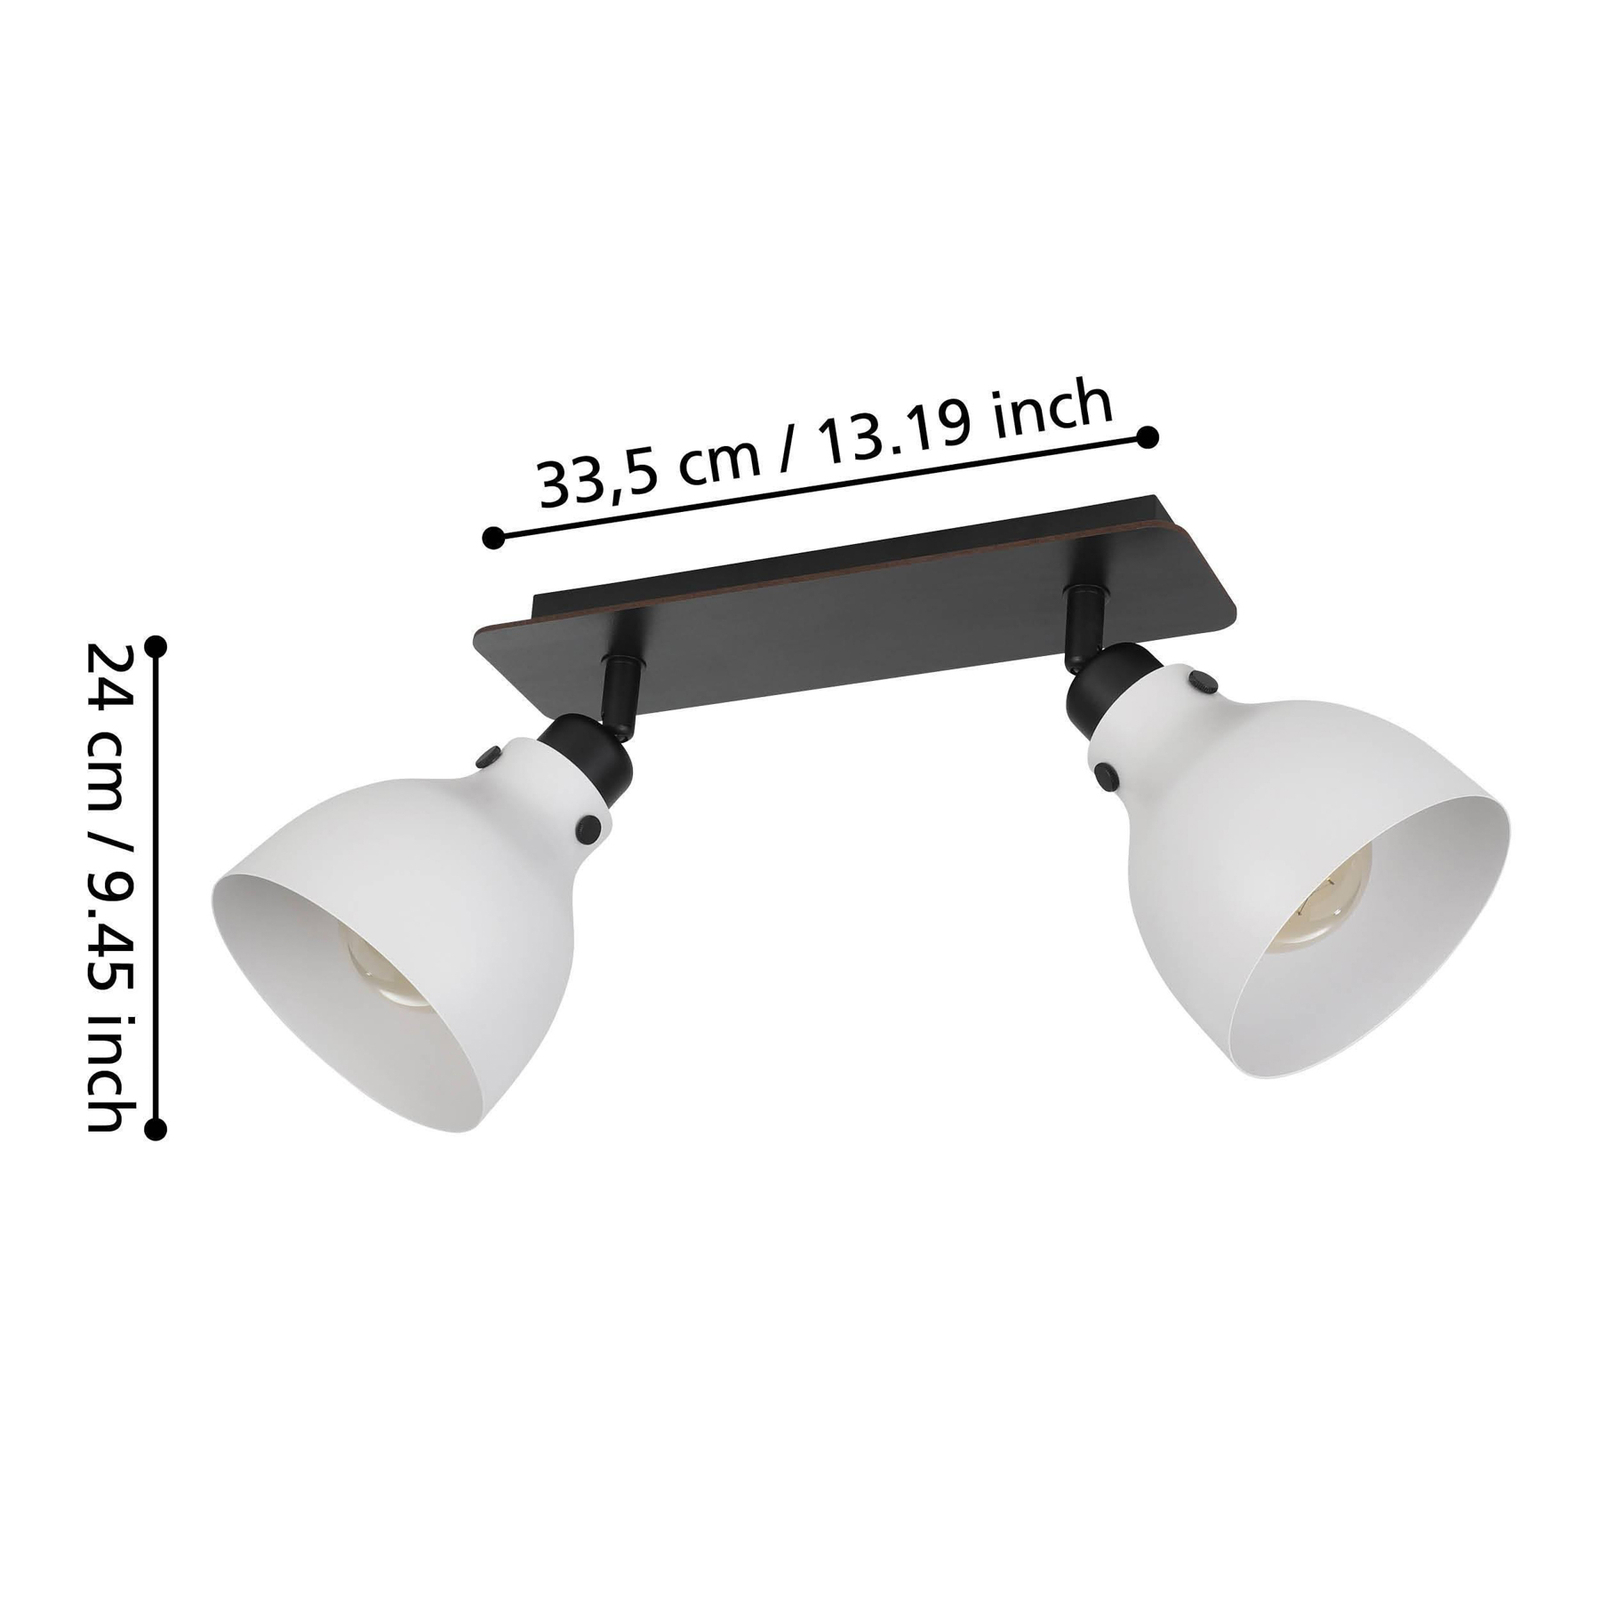 Matlock downlight, length 52 cm, grey/black, 2-bulb.